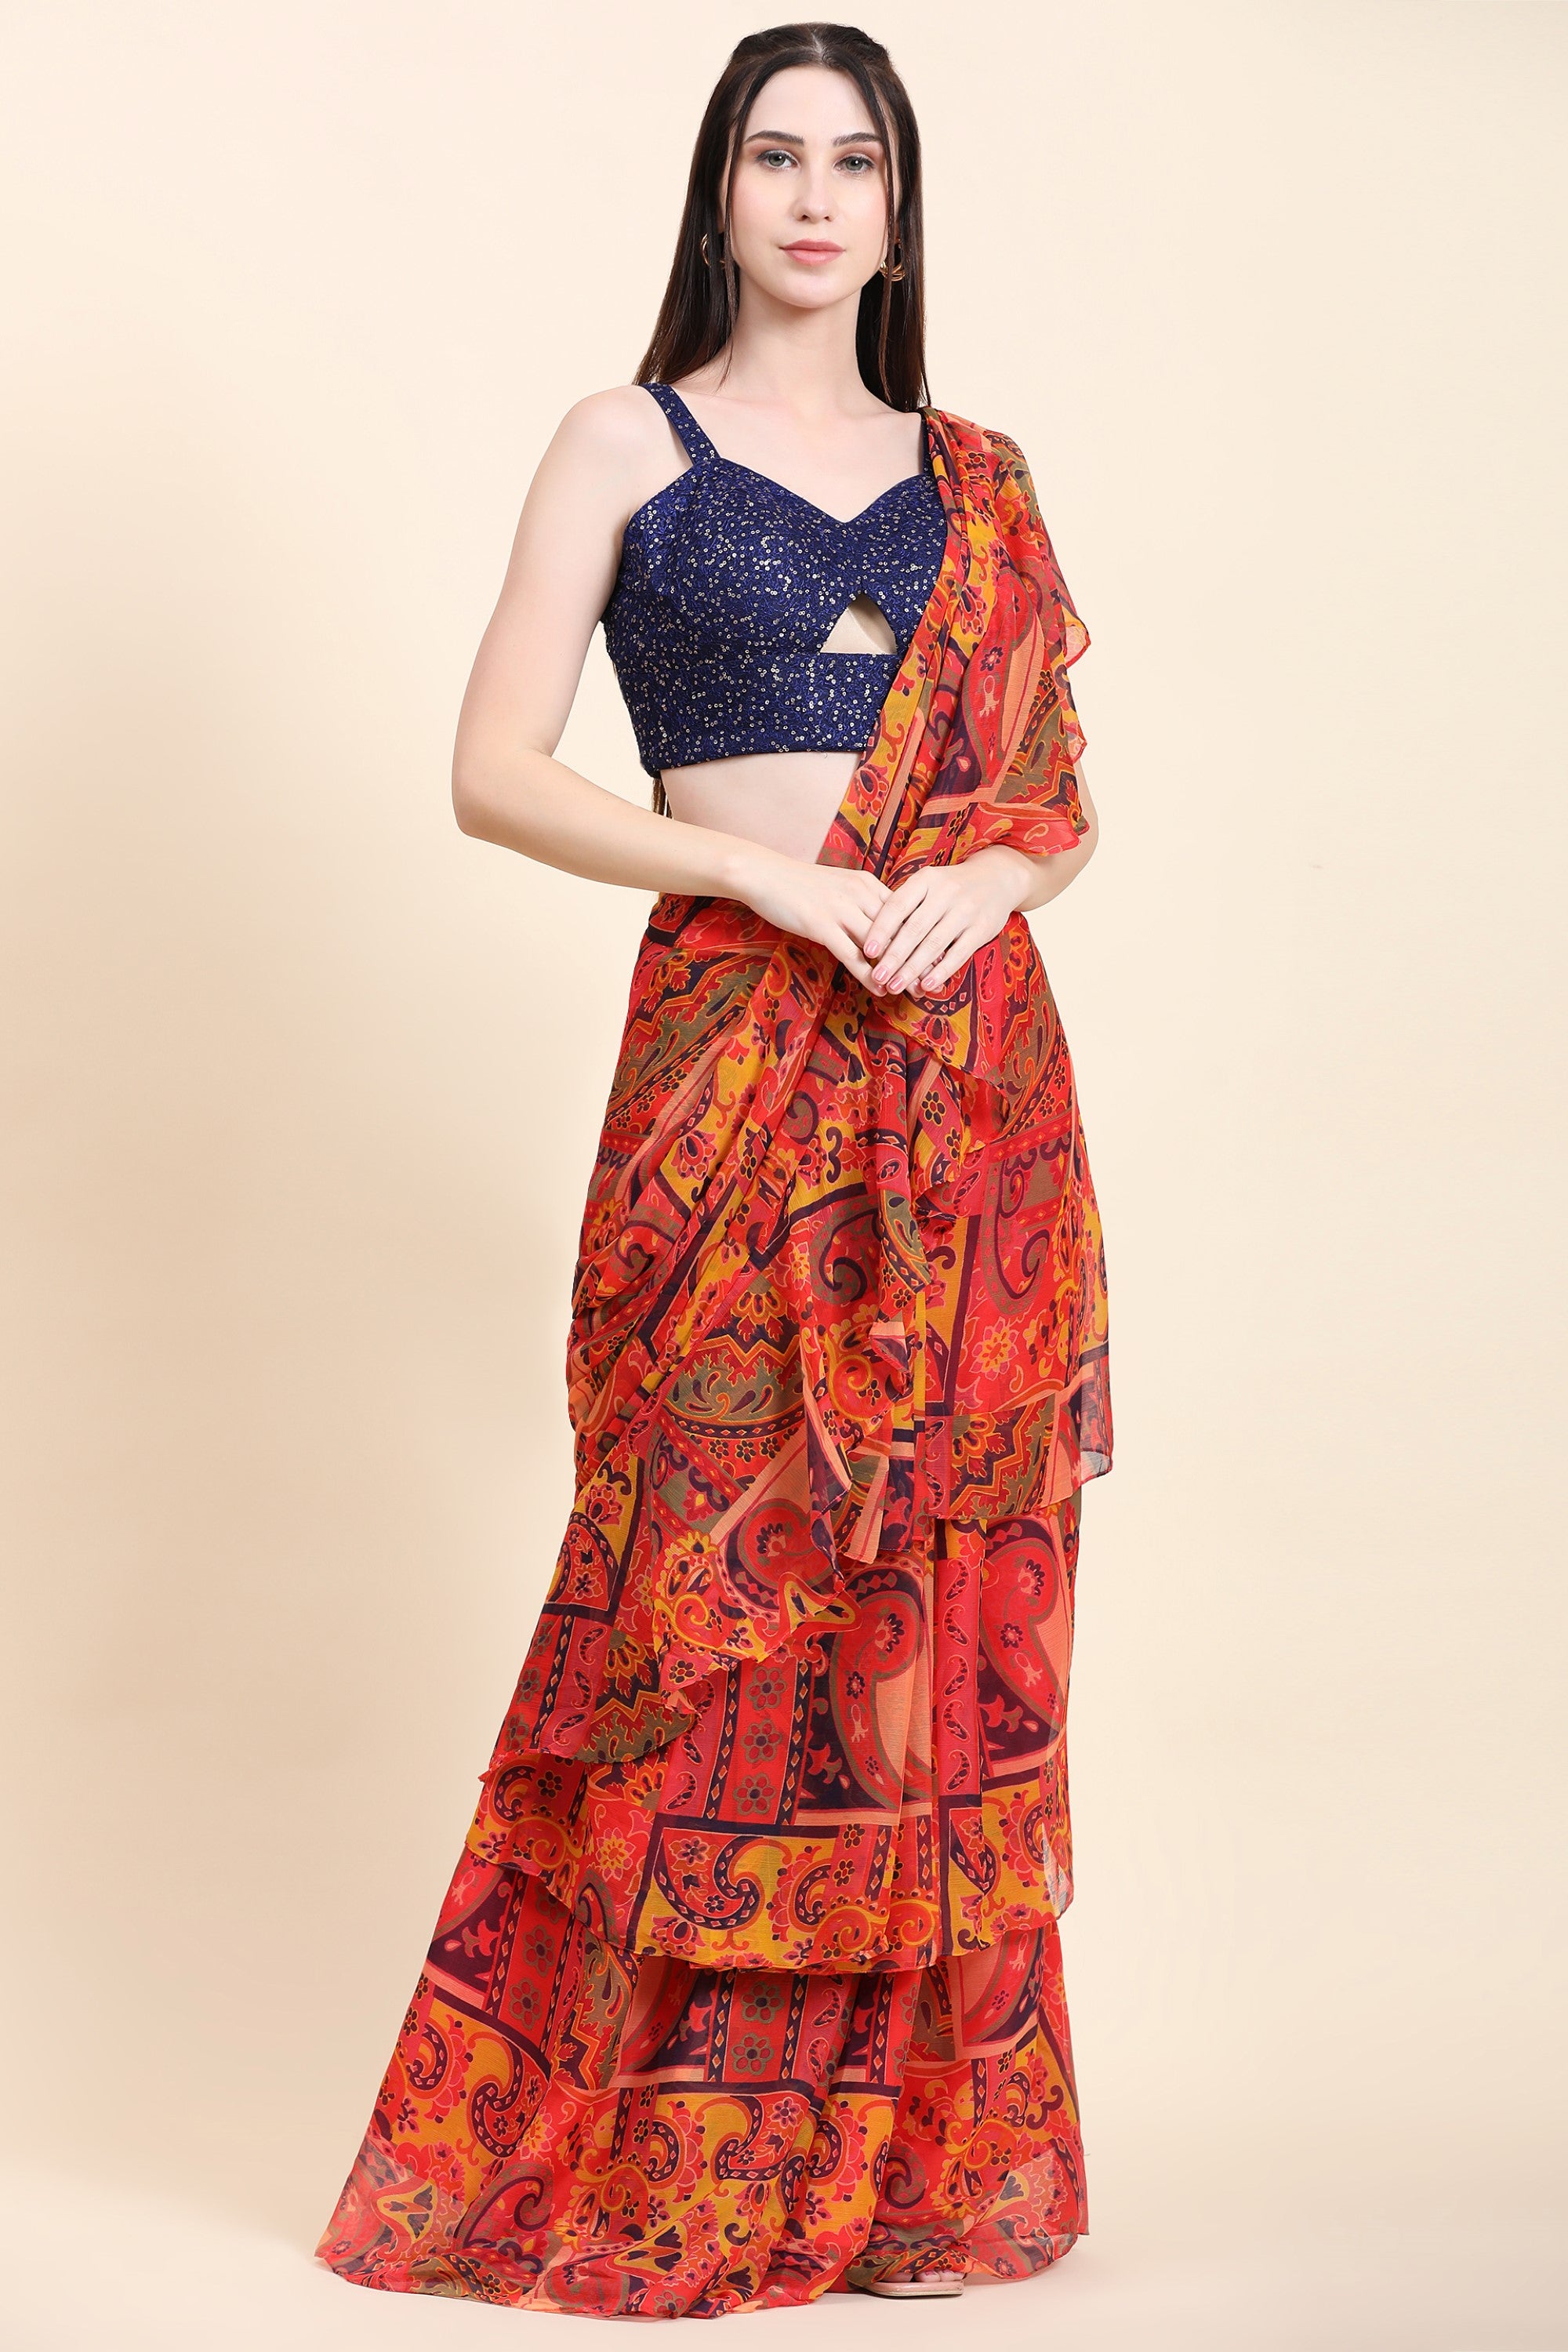 Women's Printed Chiffon Red base Multitier Ruffle pallu Saree, Sequins Blouse set - MIRACOLOS by Ruchi